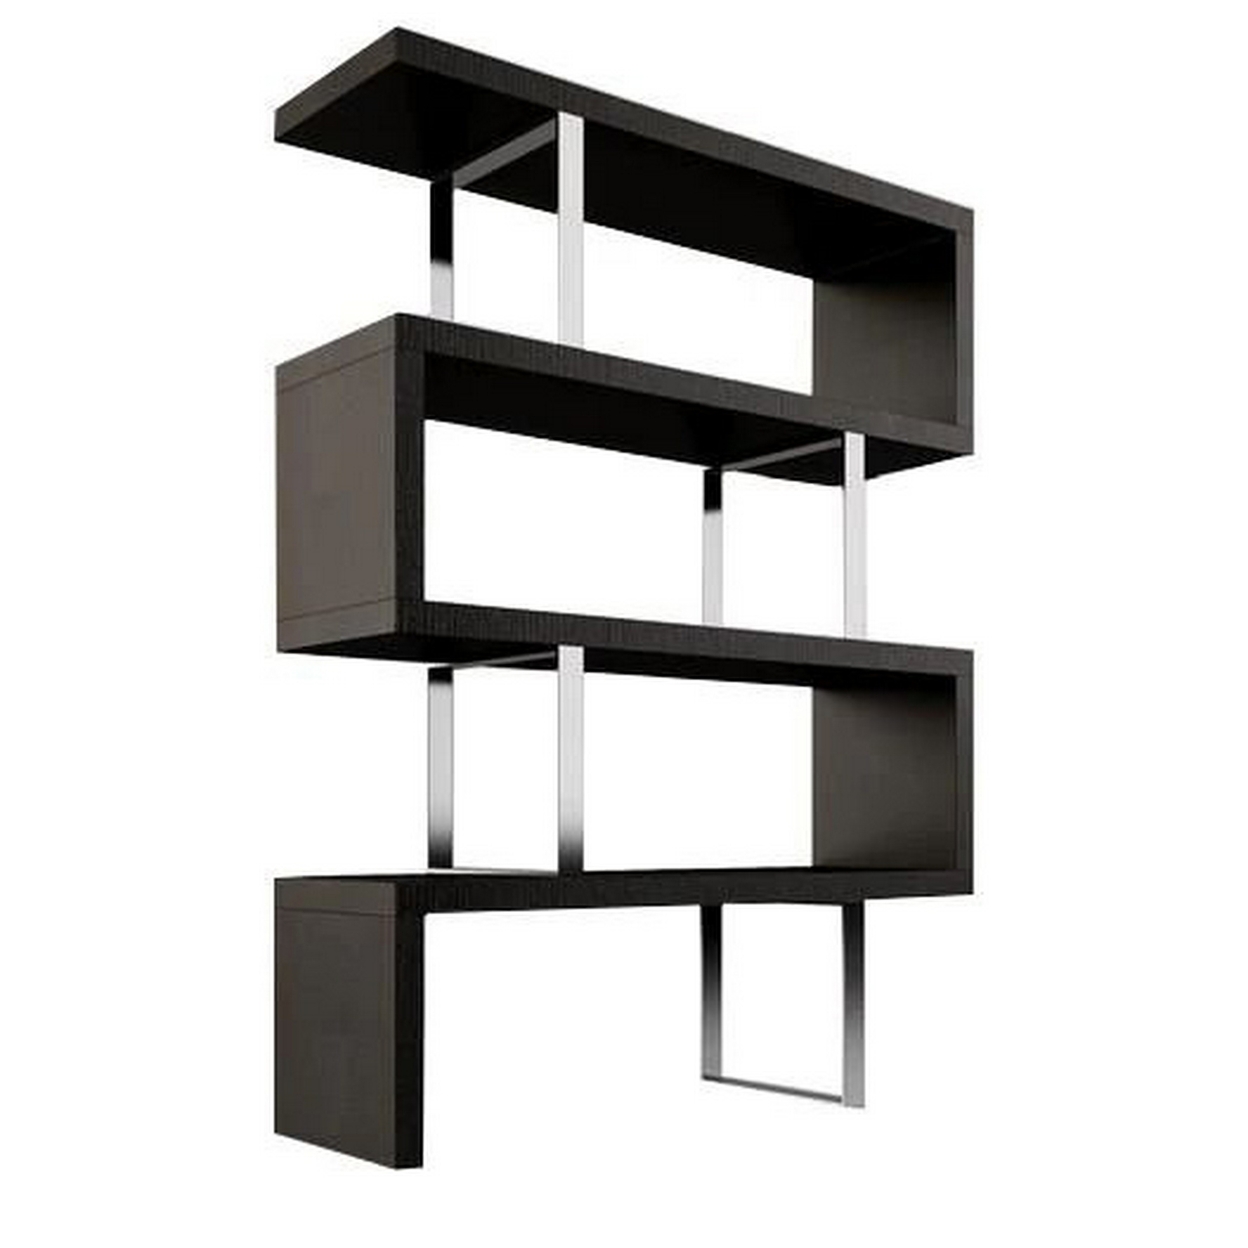 Raha 67 Inch 4 Tier Display Bookshelf, Chrome Metal, Black Lacquered MDF - Saltoro Sherpi